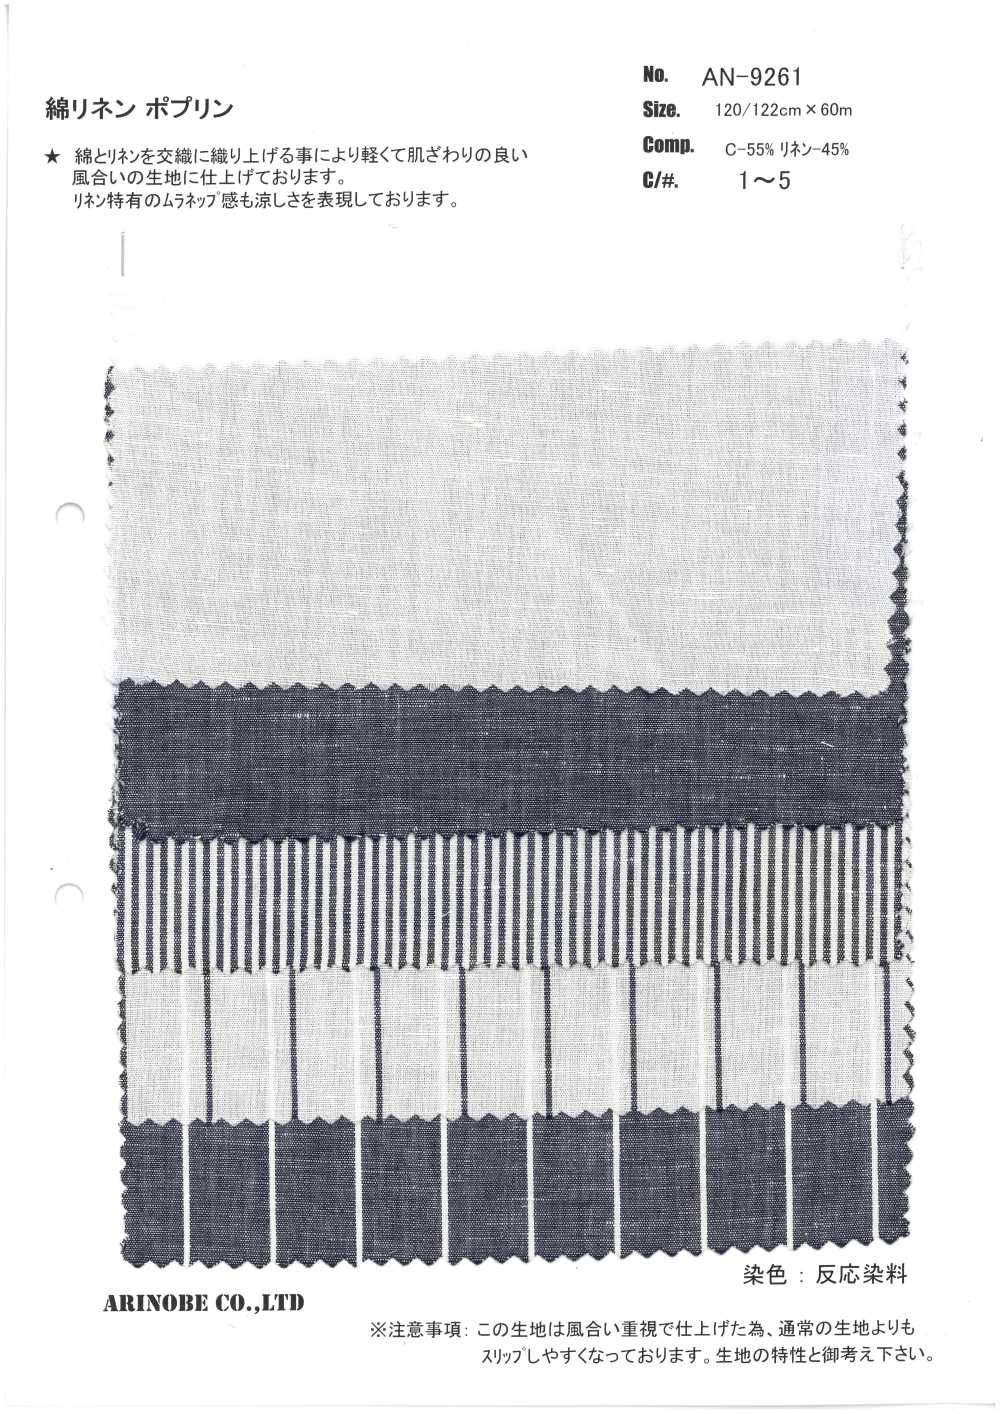 AN-9261 Baumwoll-Leinen-Popeline[Textilgewebe] ARINOBE CO., LTD.